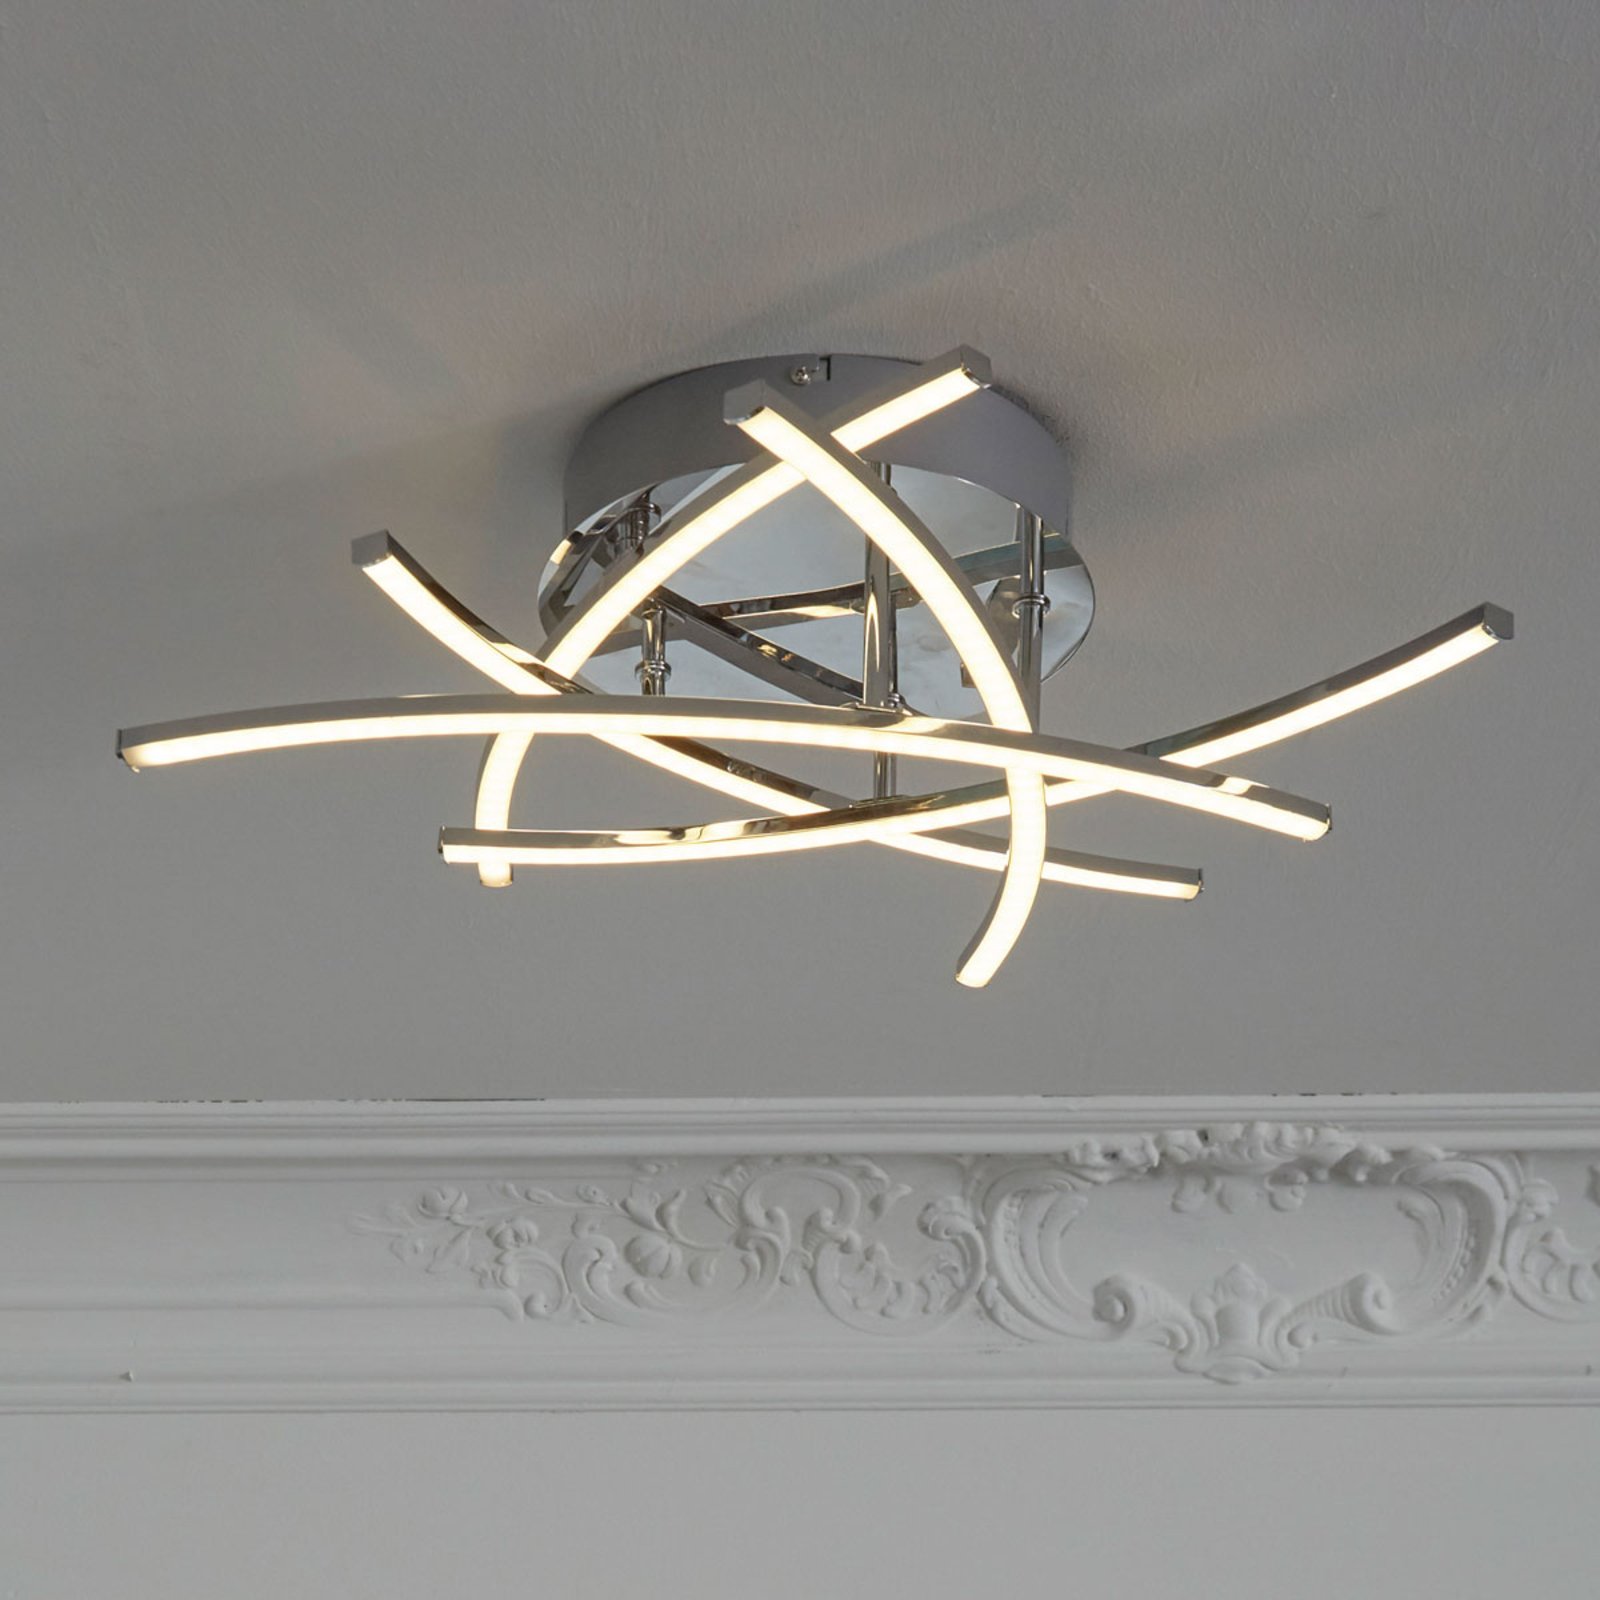 LED-Deckenlampe Cross tunable white, 5fl., chrom